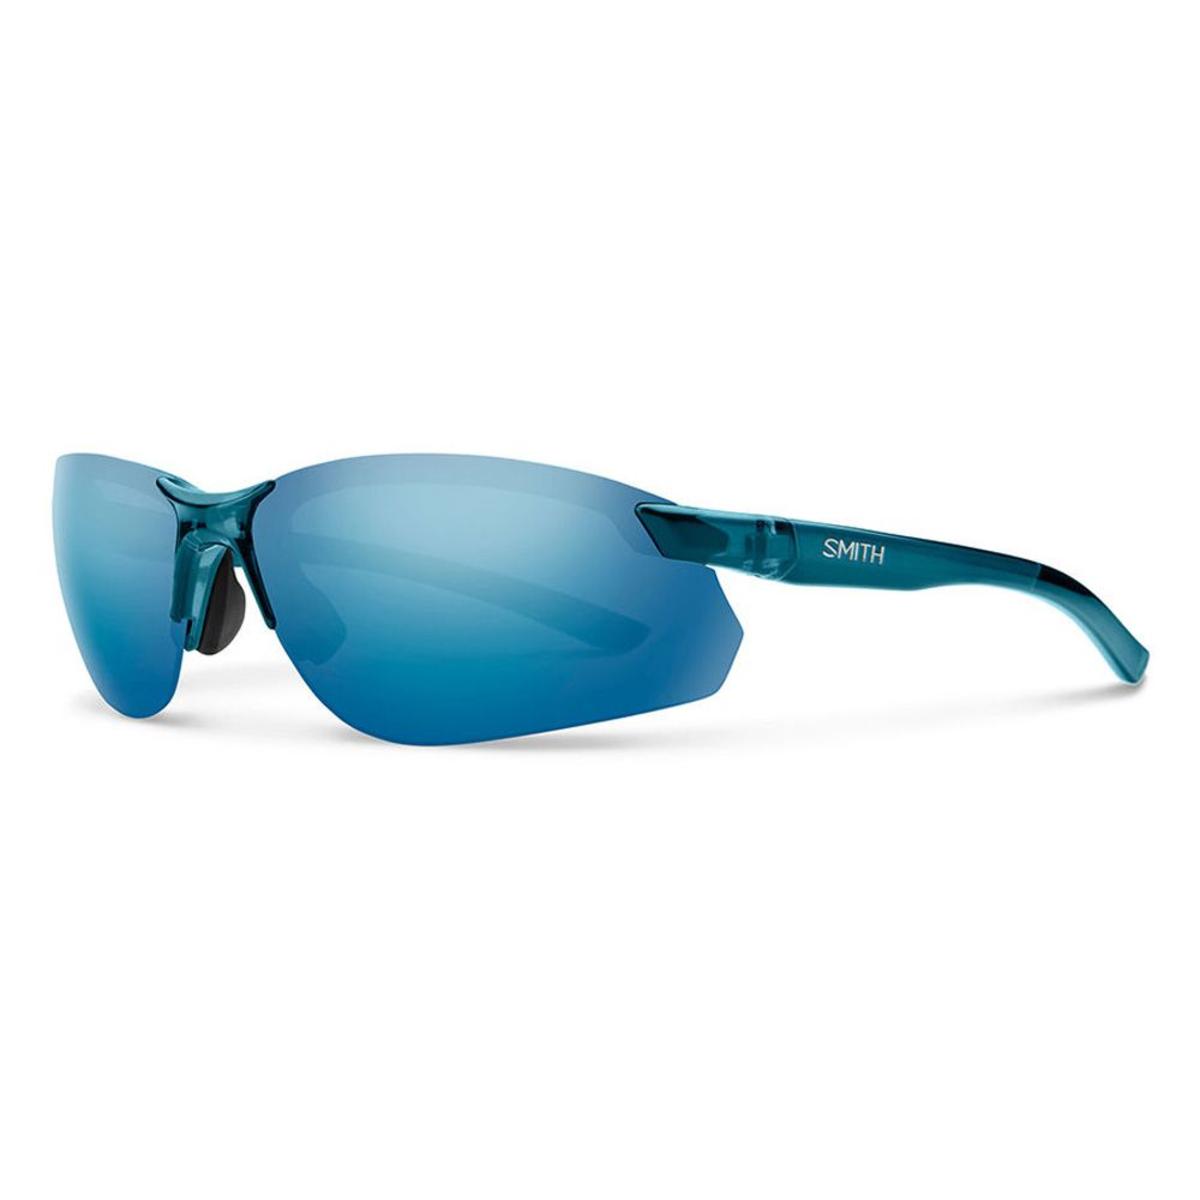 Smith Optics Parallel Max 2 Sunglasses Polarized Blue Mirror - Crystal Mediterranean Frame